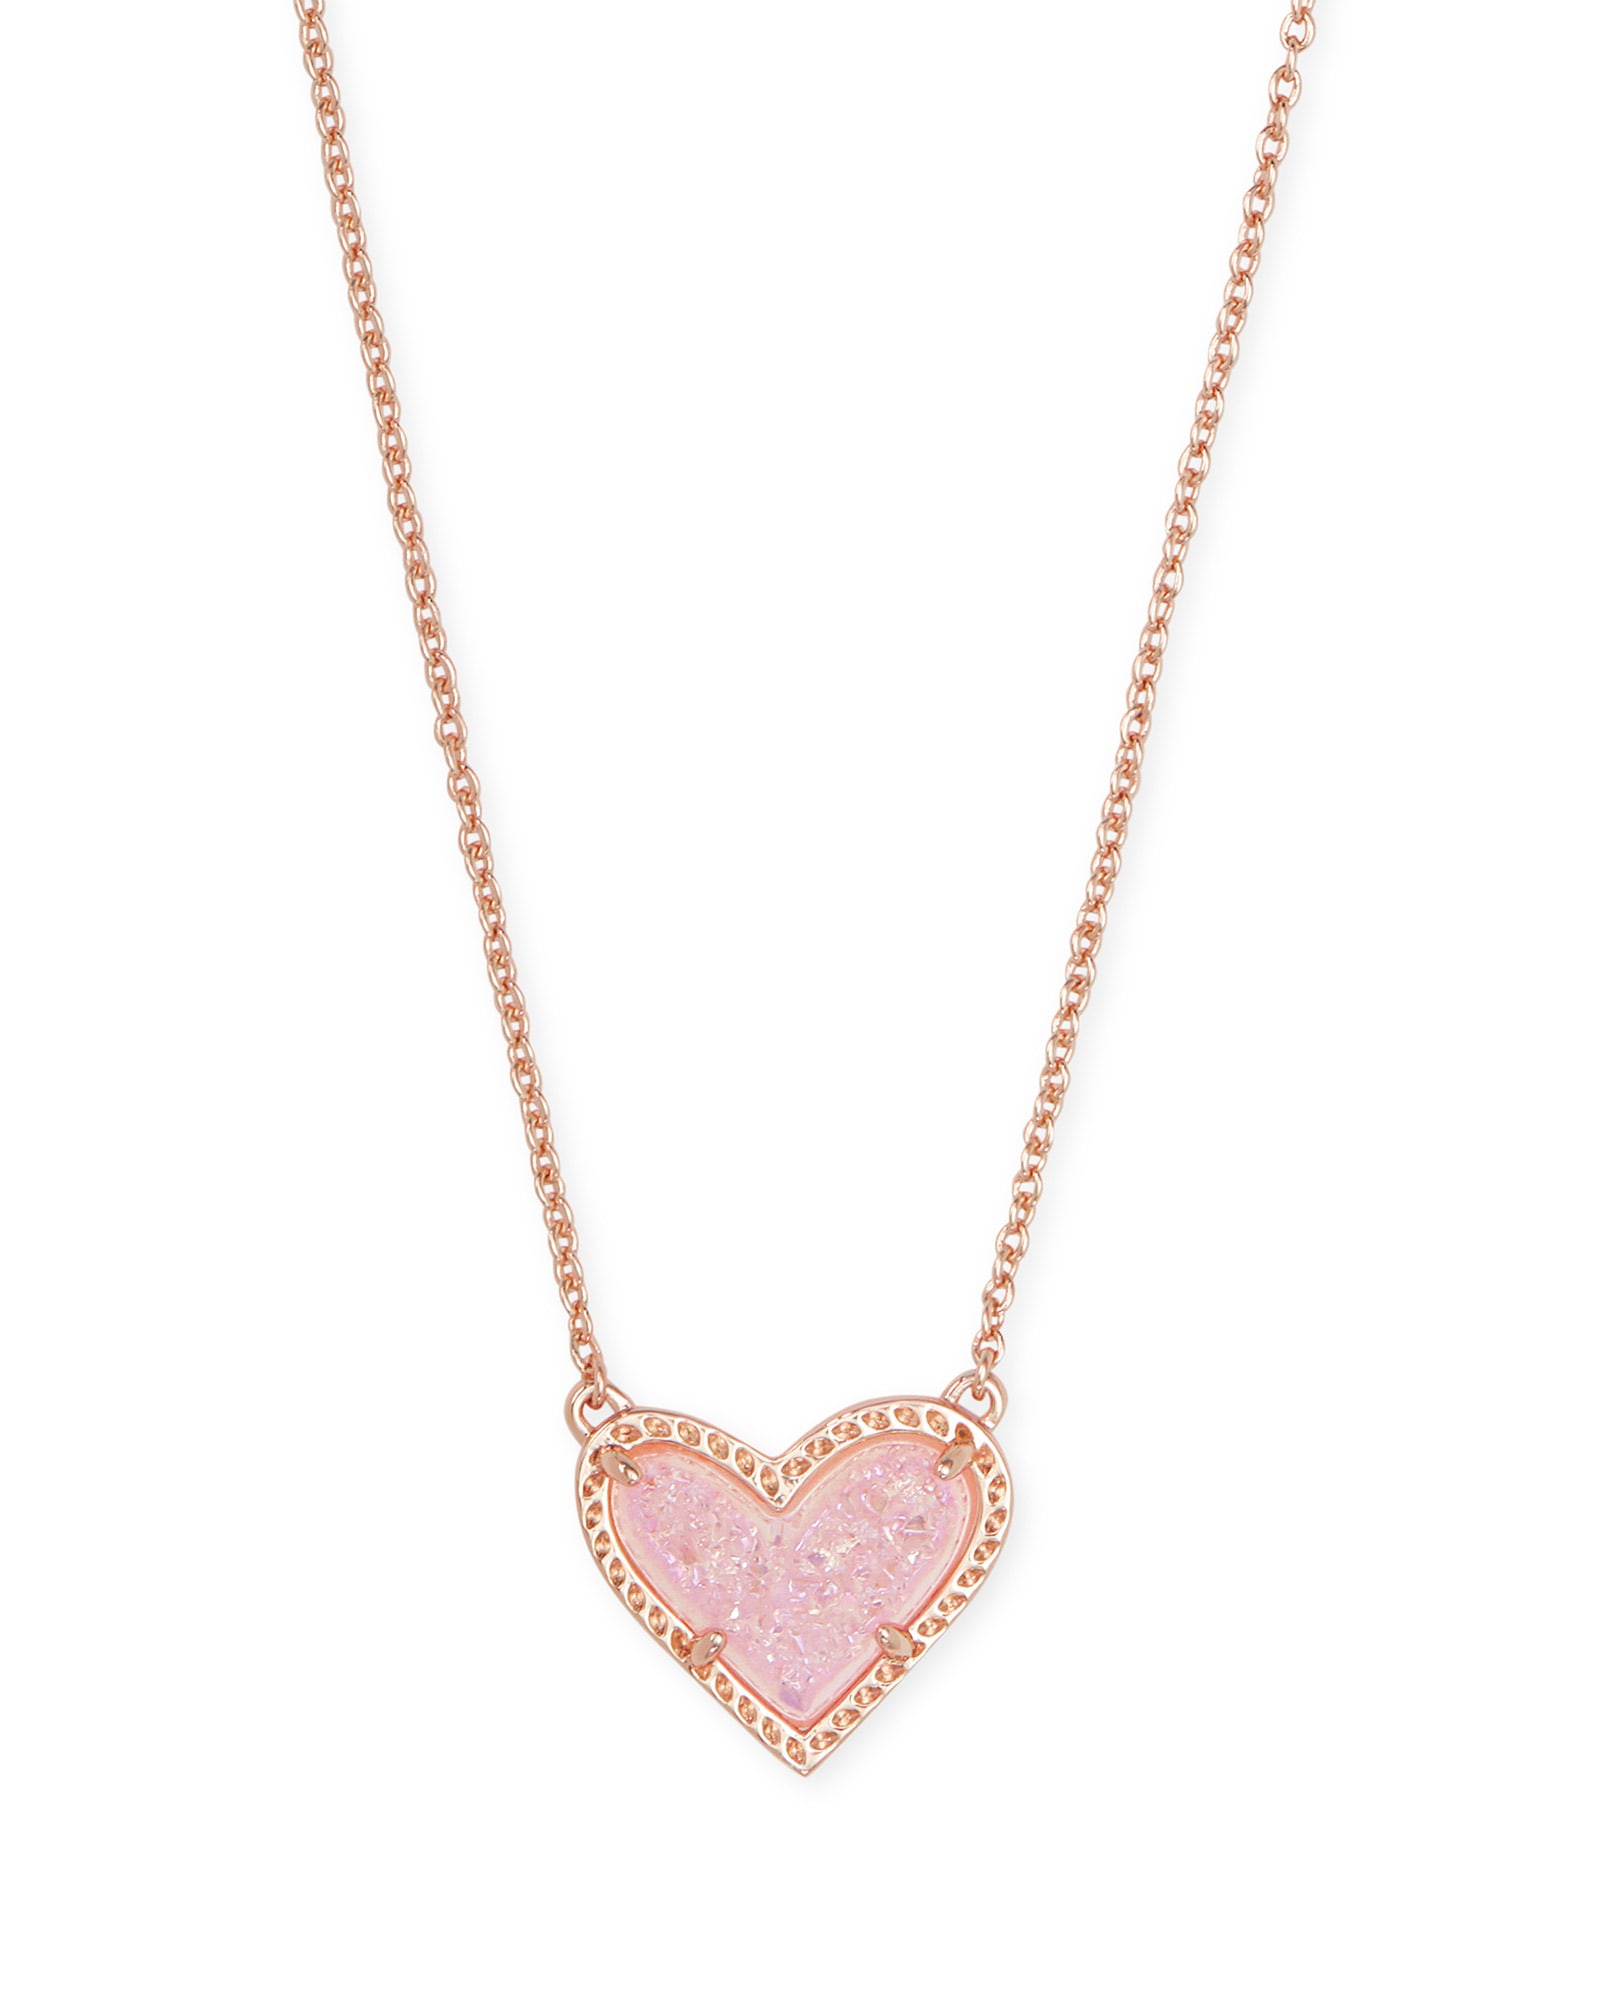 Beautiful Gold Heart Pendant Necklace Women's Fashion Jewelry